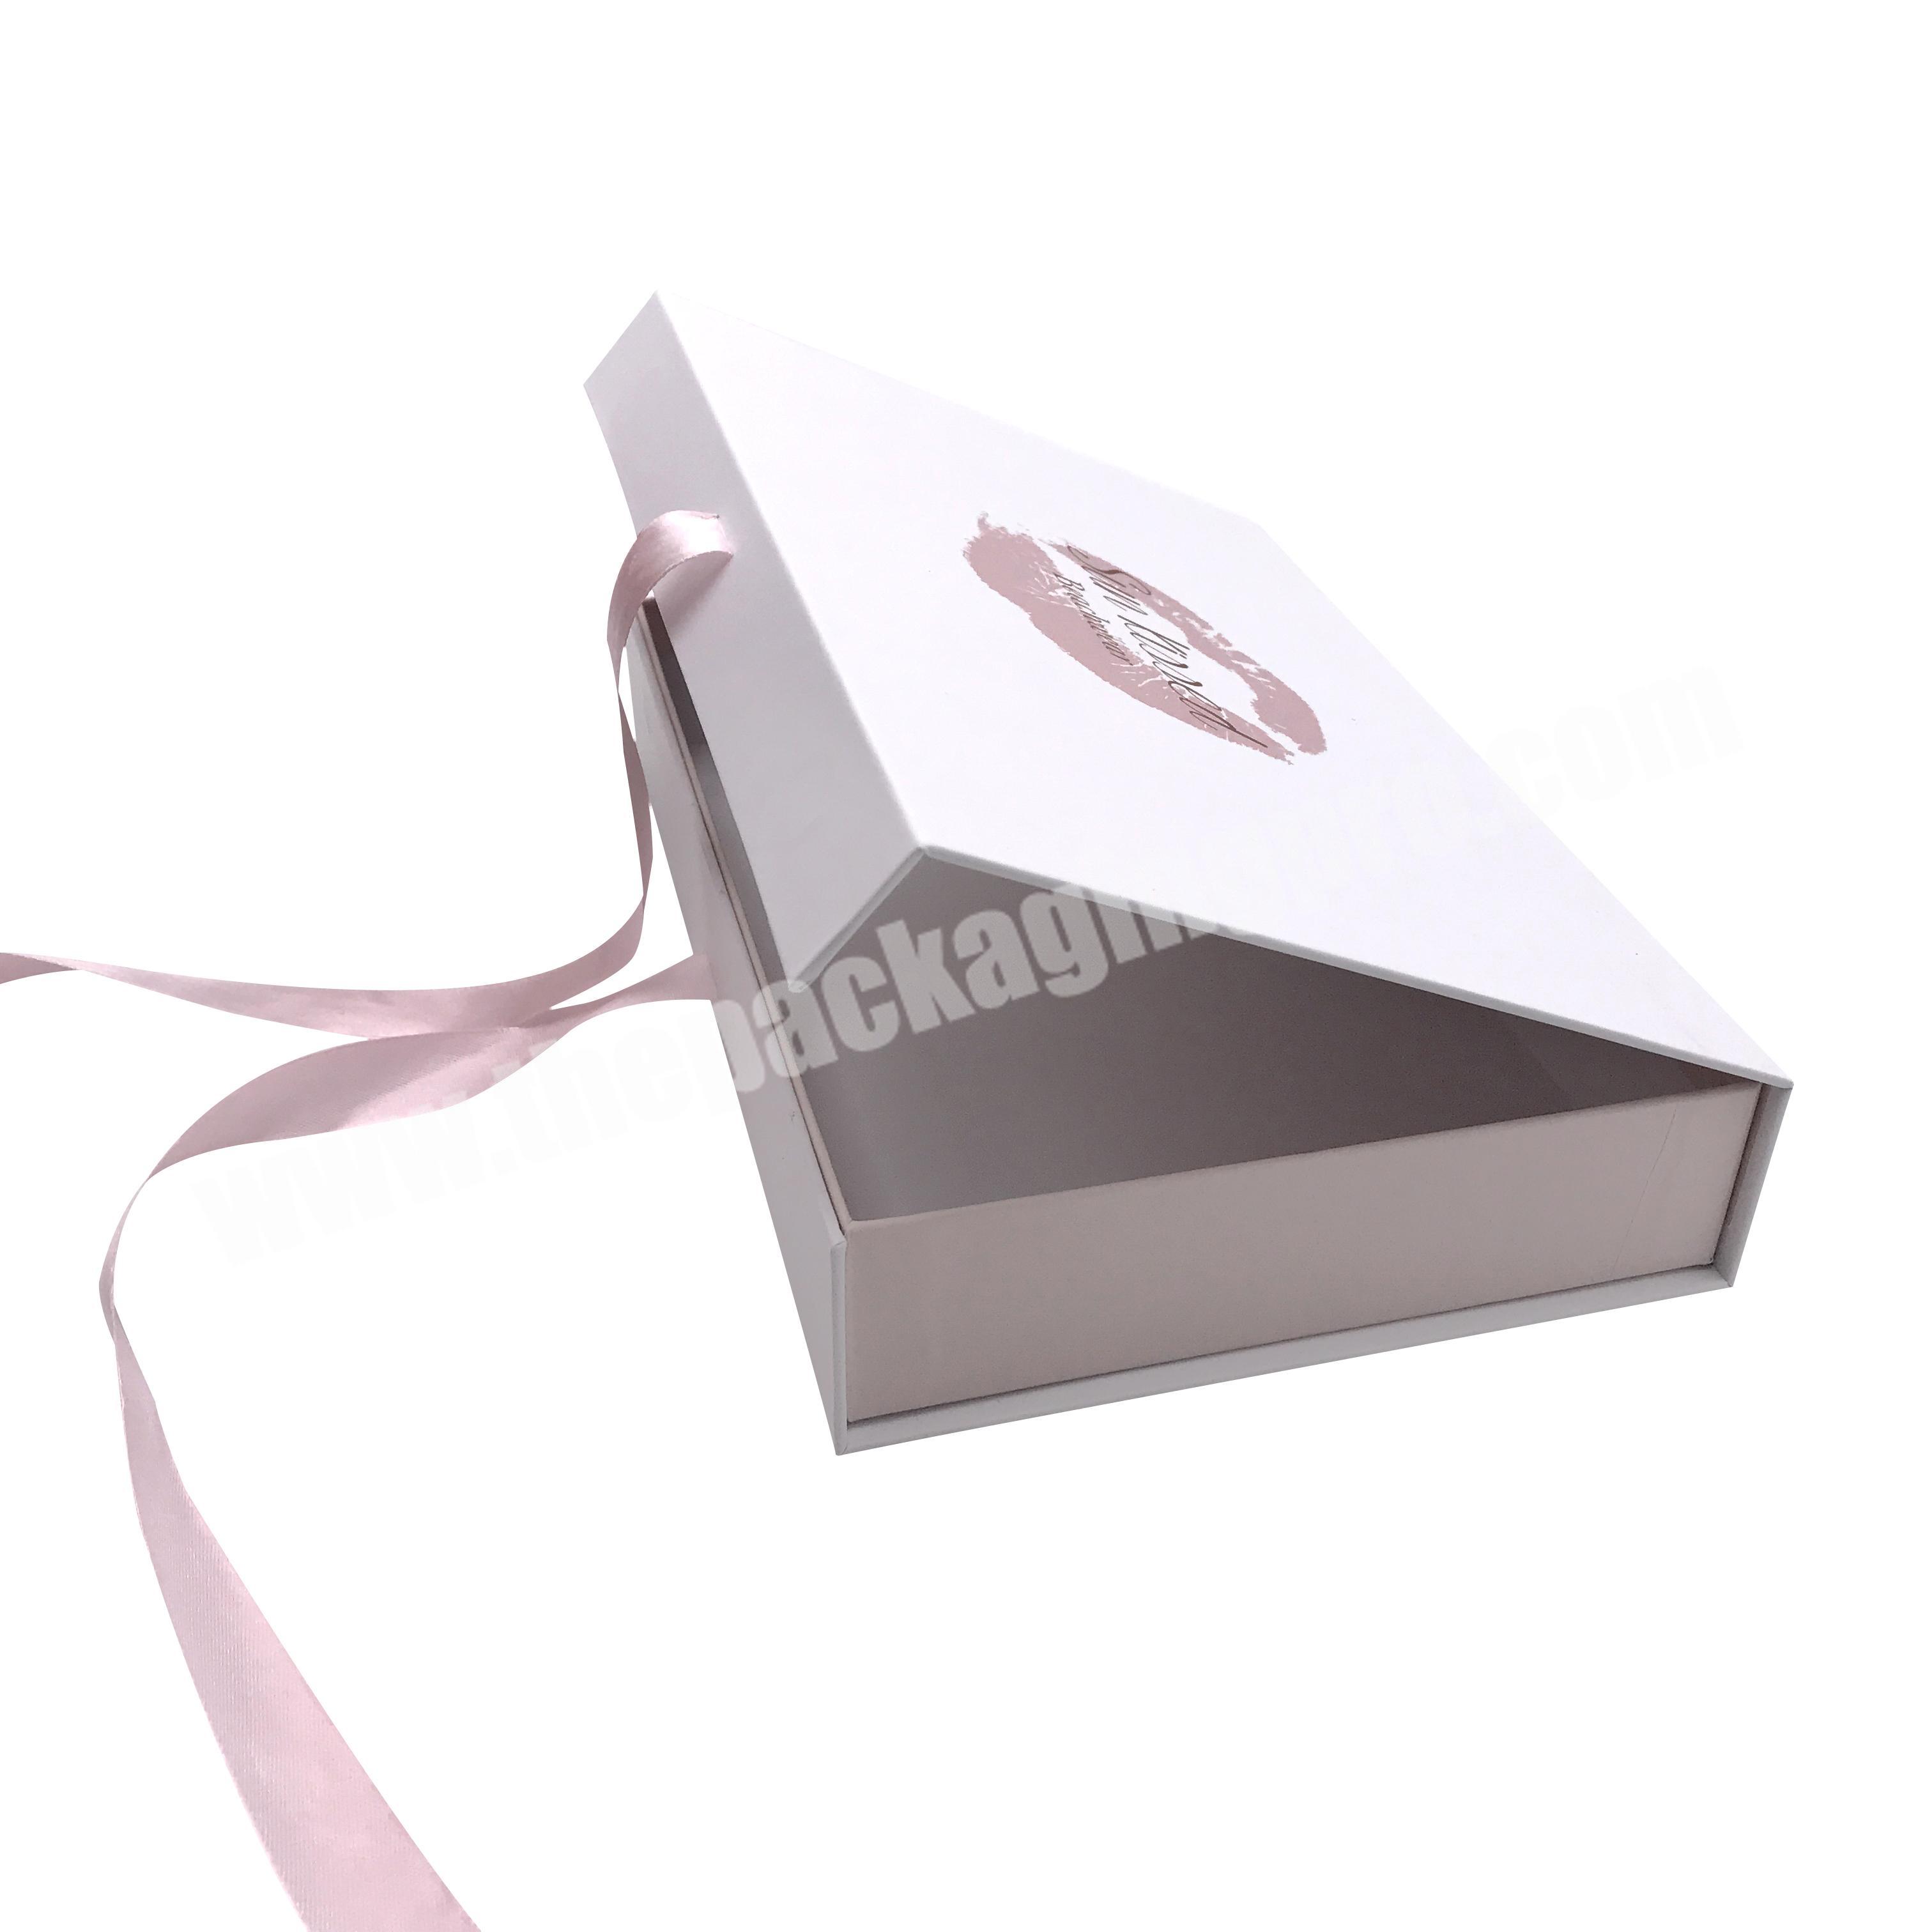 Made in shenzhen stack gift box ribbon printed packaging set